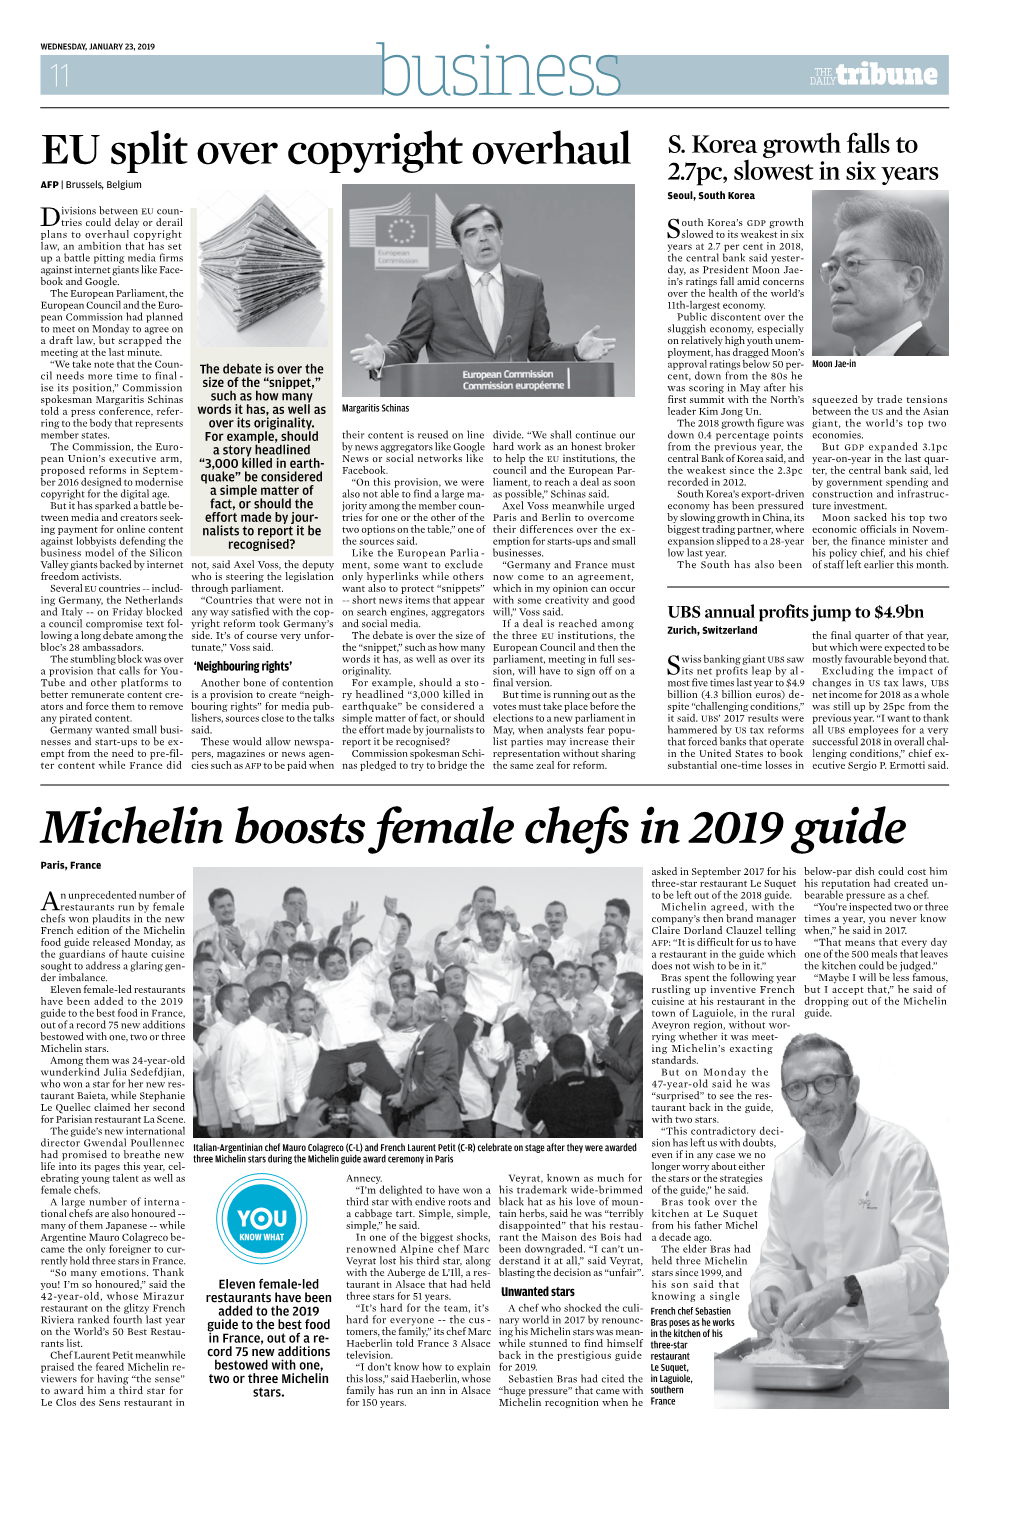 Michelin Boosts Female Chefs in 2019 Guide